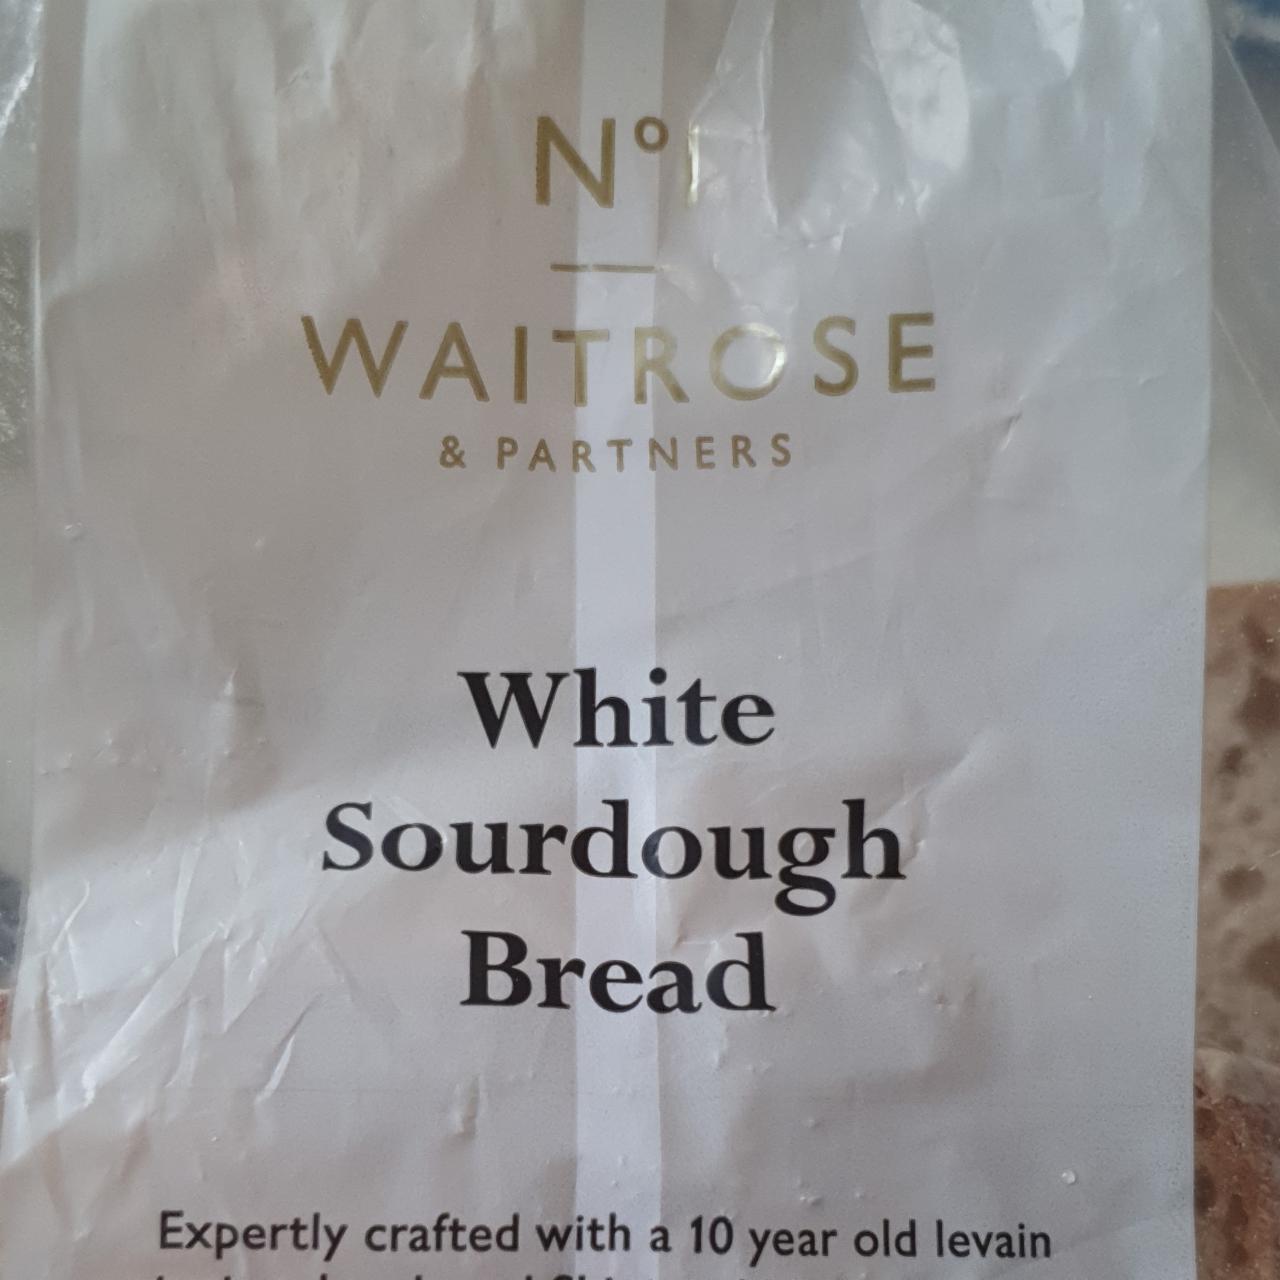 Fotografie - No.1 White Sourdough Bread Waitrose & Partners